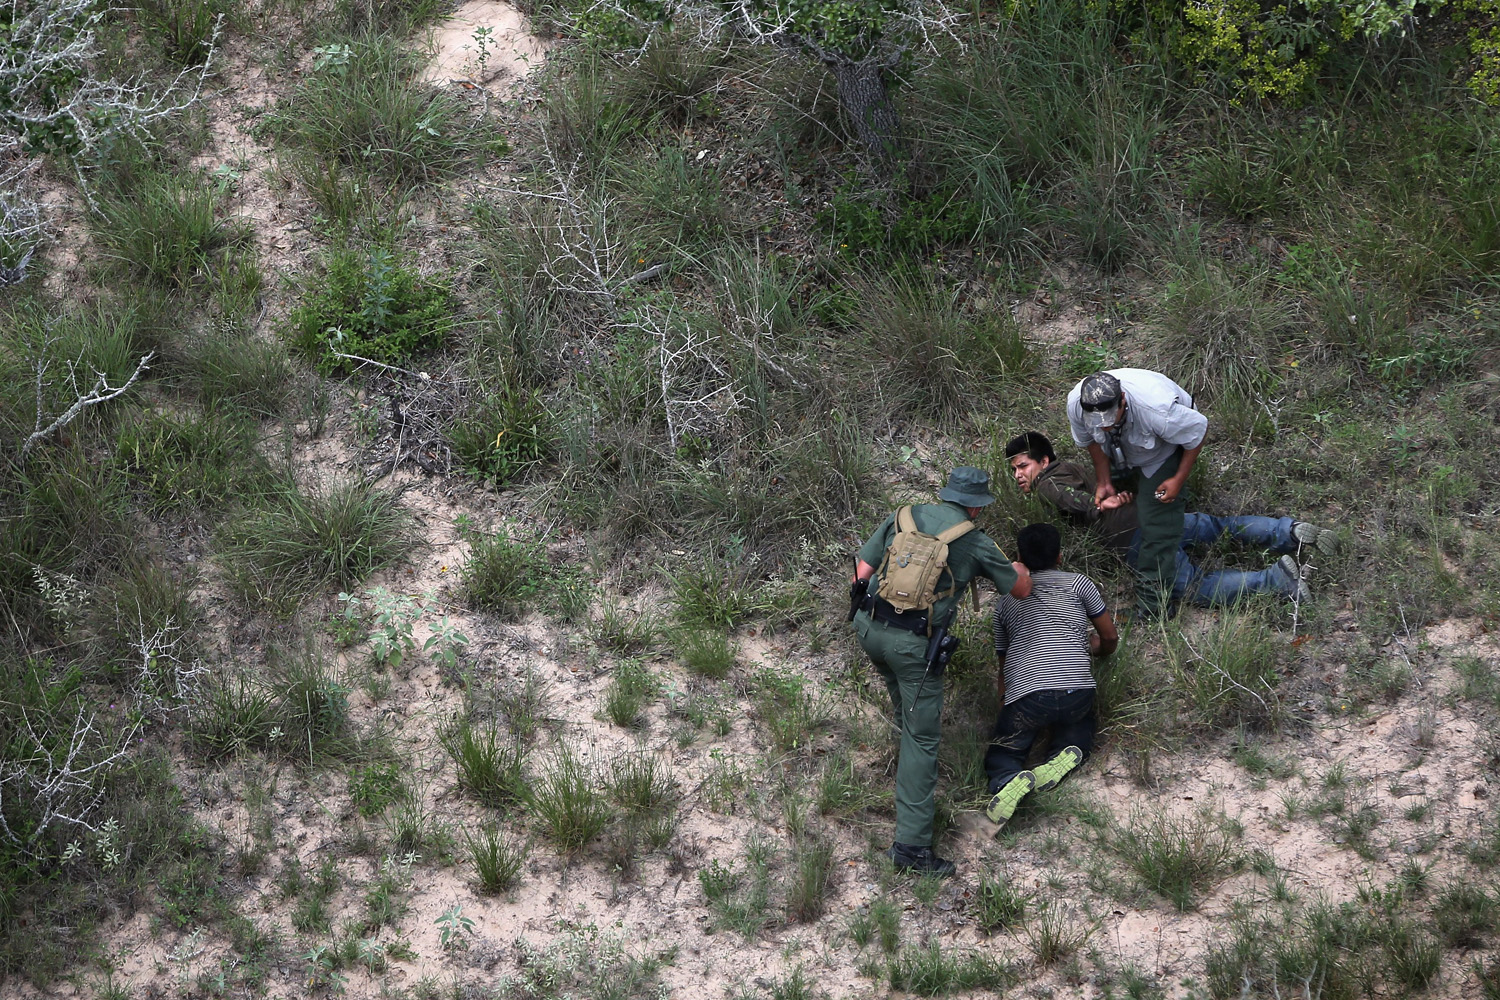 BESTPIX - U.S. Agents Take Undocumented Immigrants Into Custody Near Texas-Mexico Border